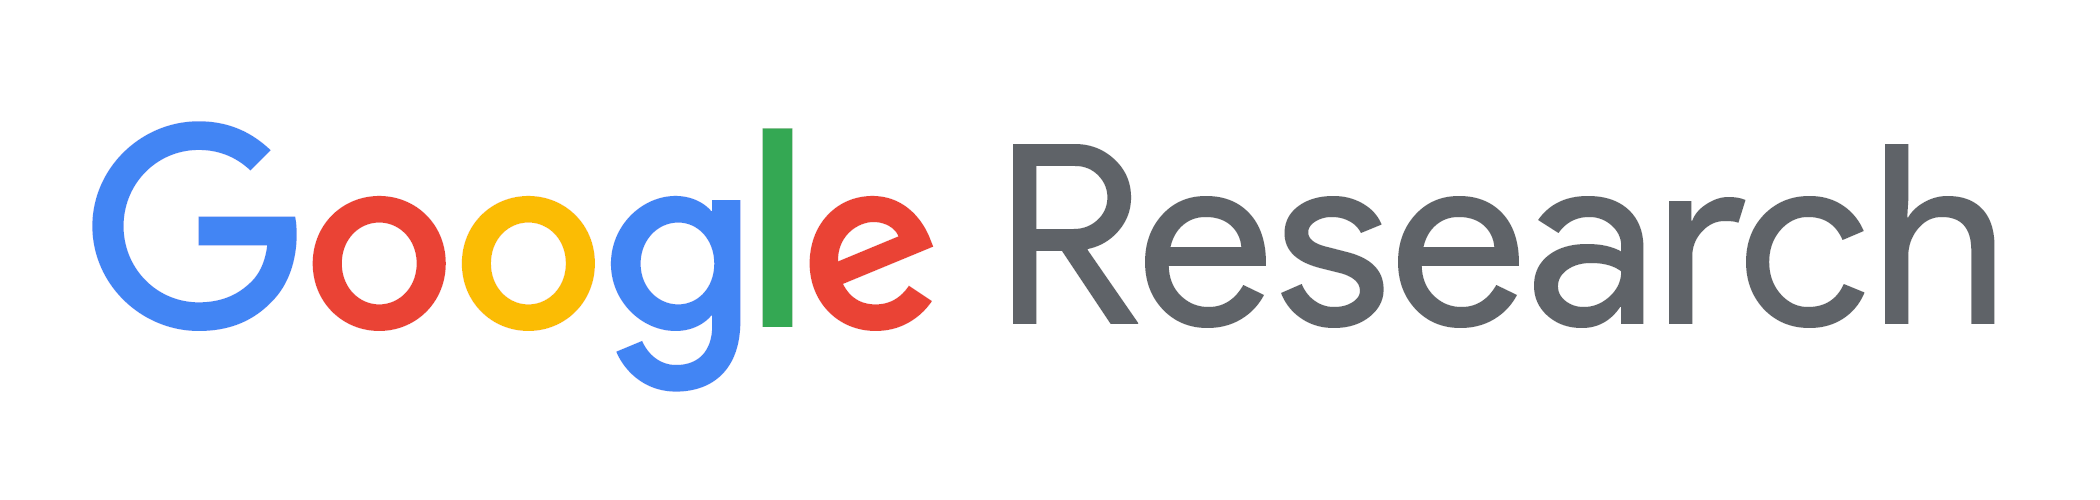 Google Research exploreCSR Logo